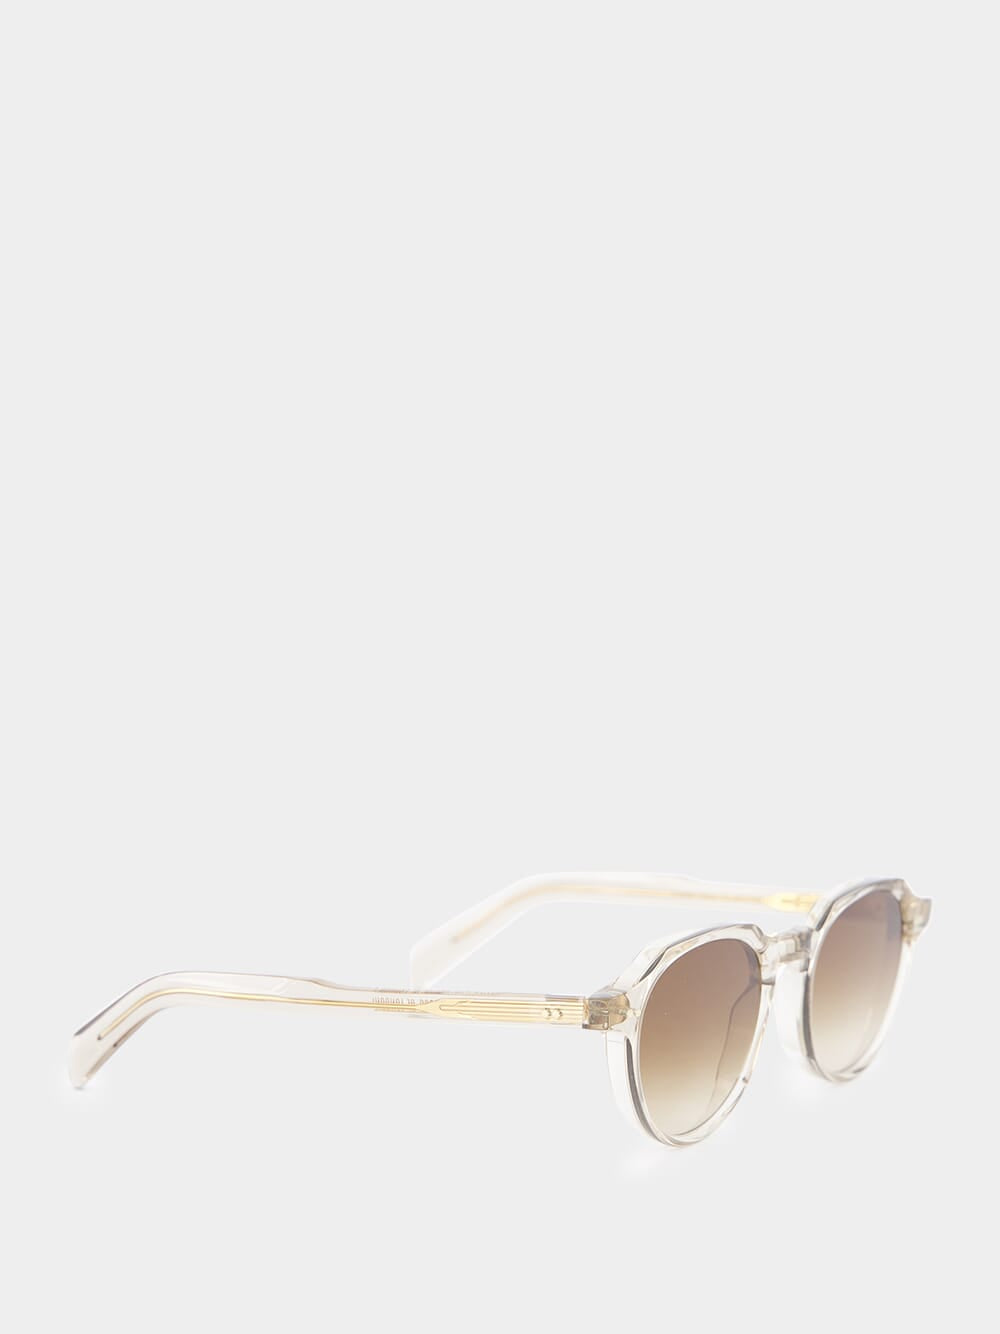 GR06 Sand Crystal Round Sunglasses